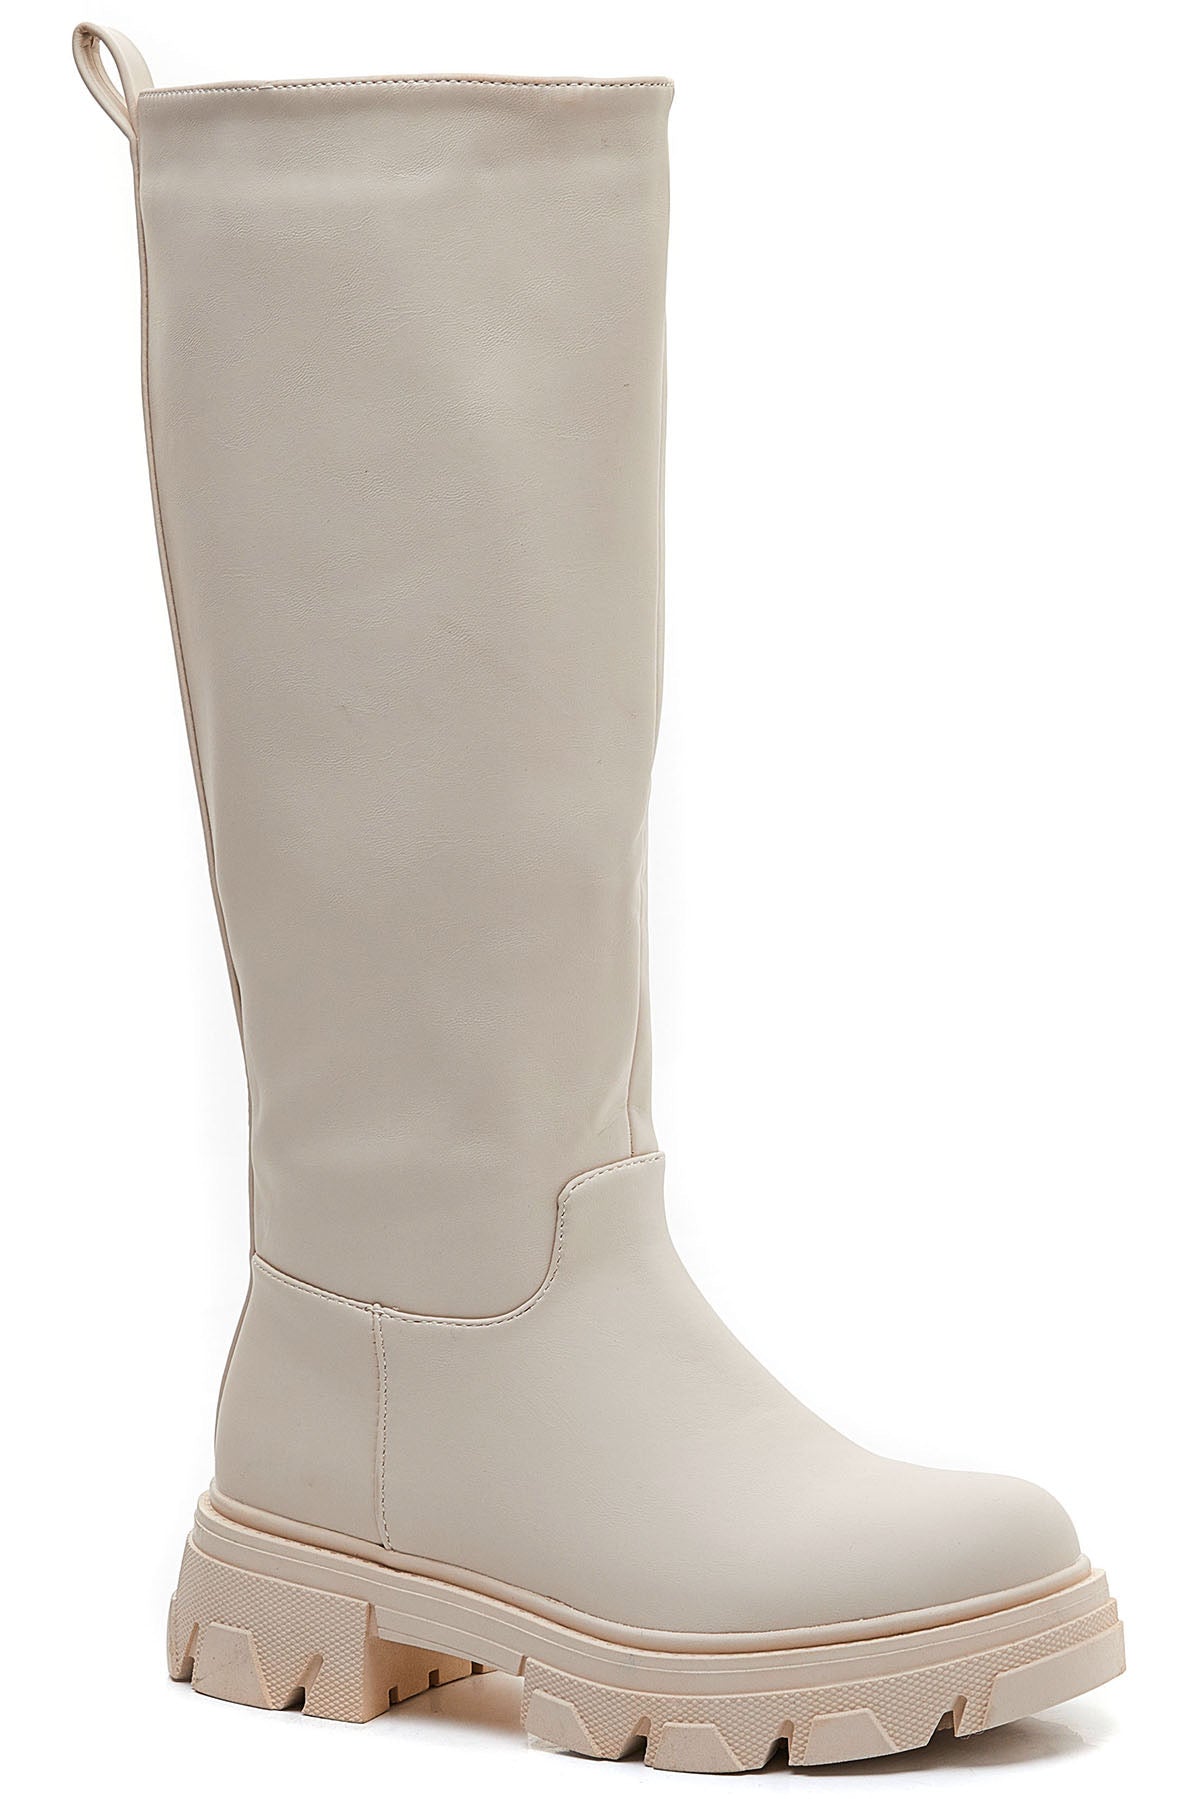 Mila - boots beige